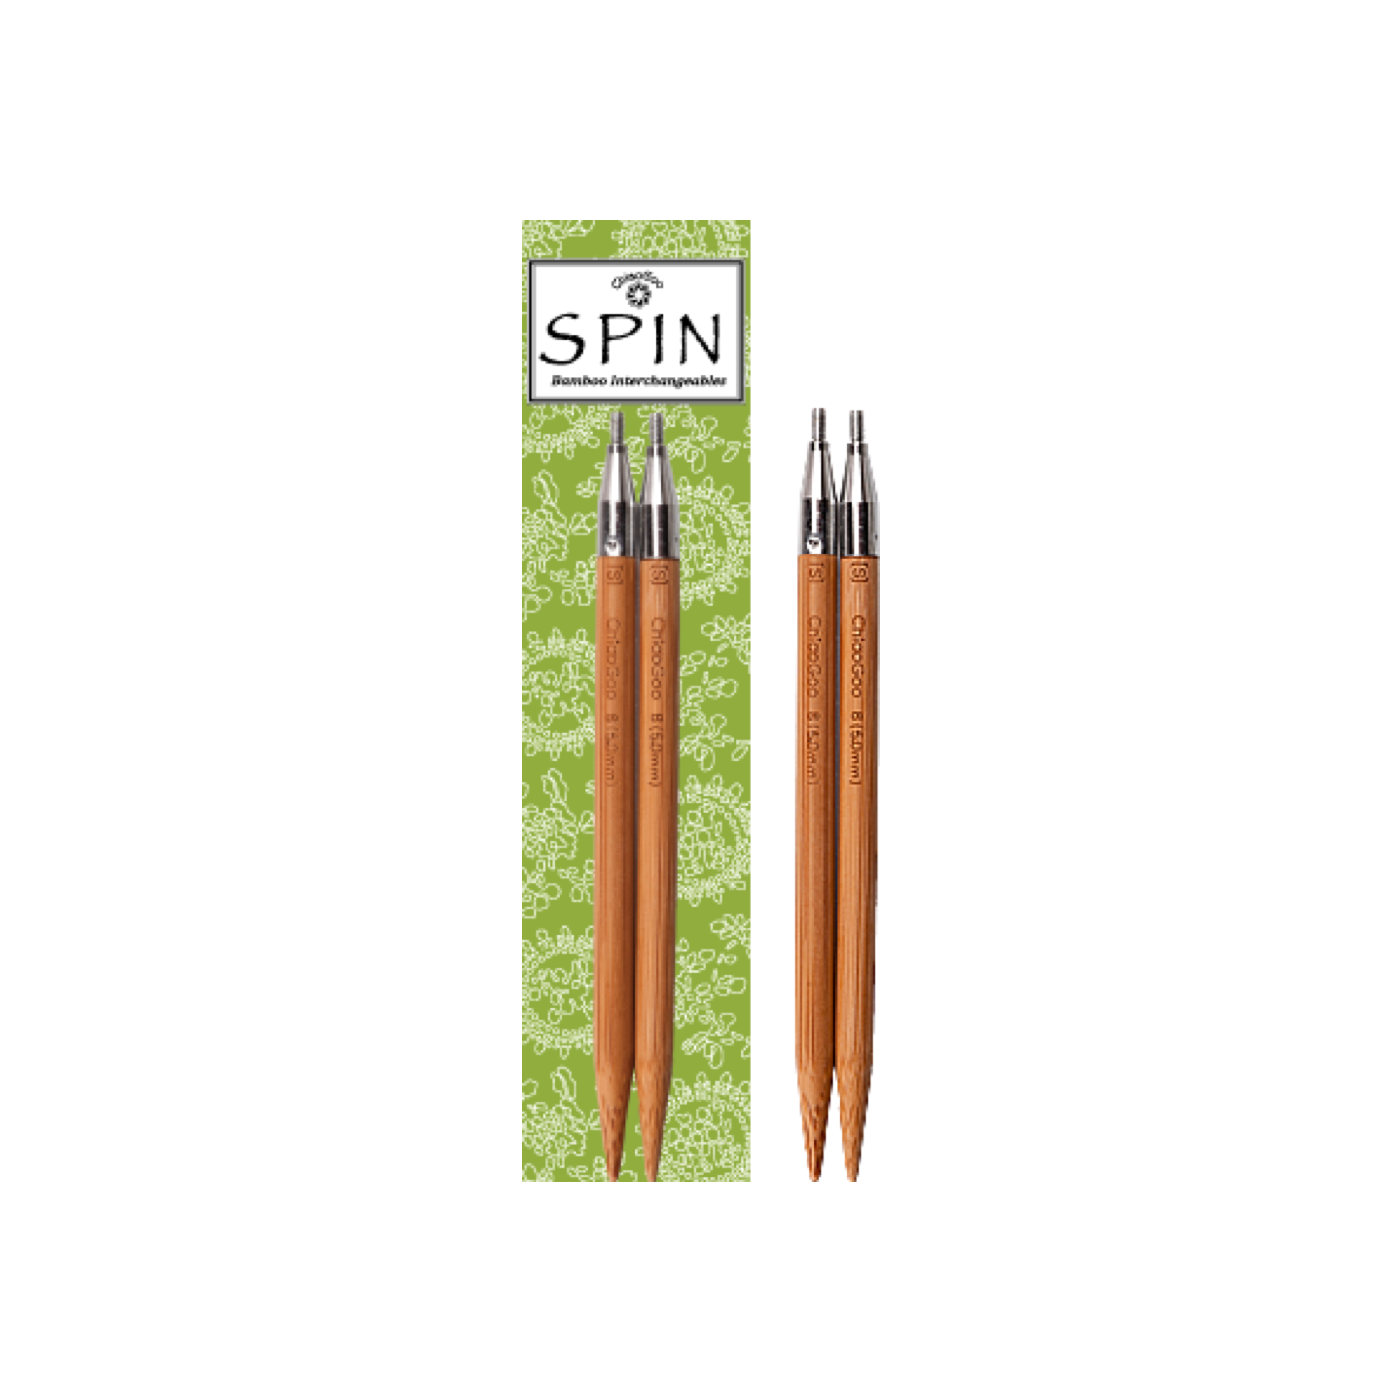 Aiguilles interchangeables SPIN Bamboo - 13 cm